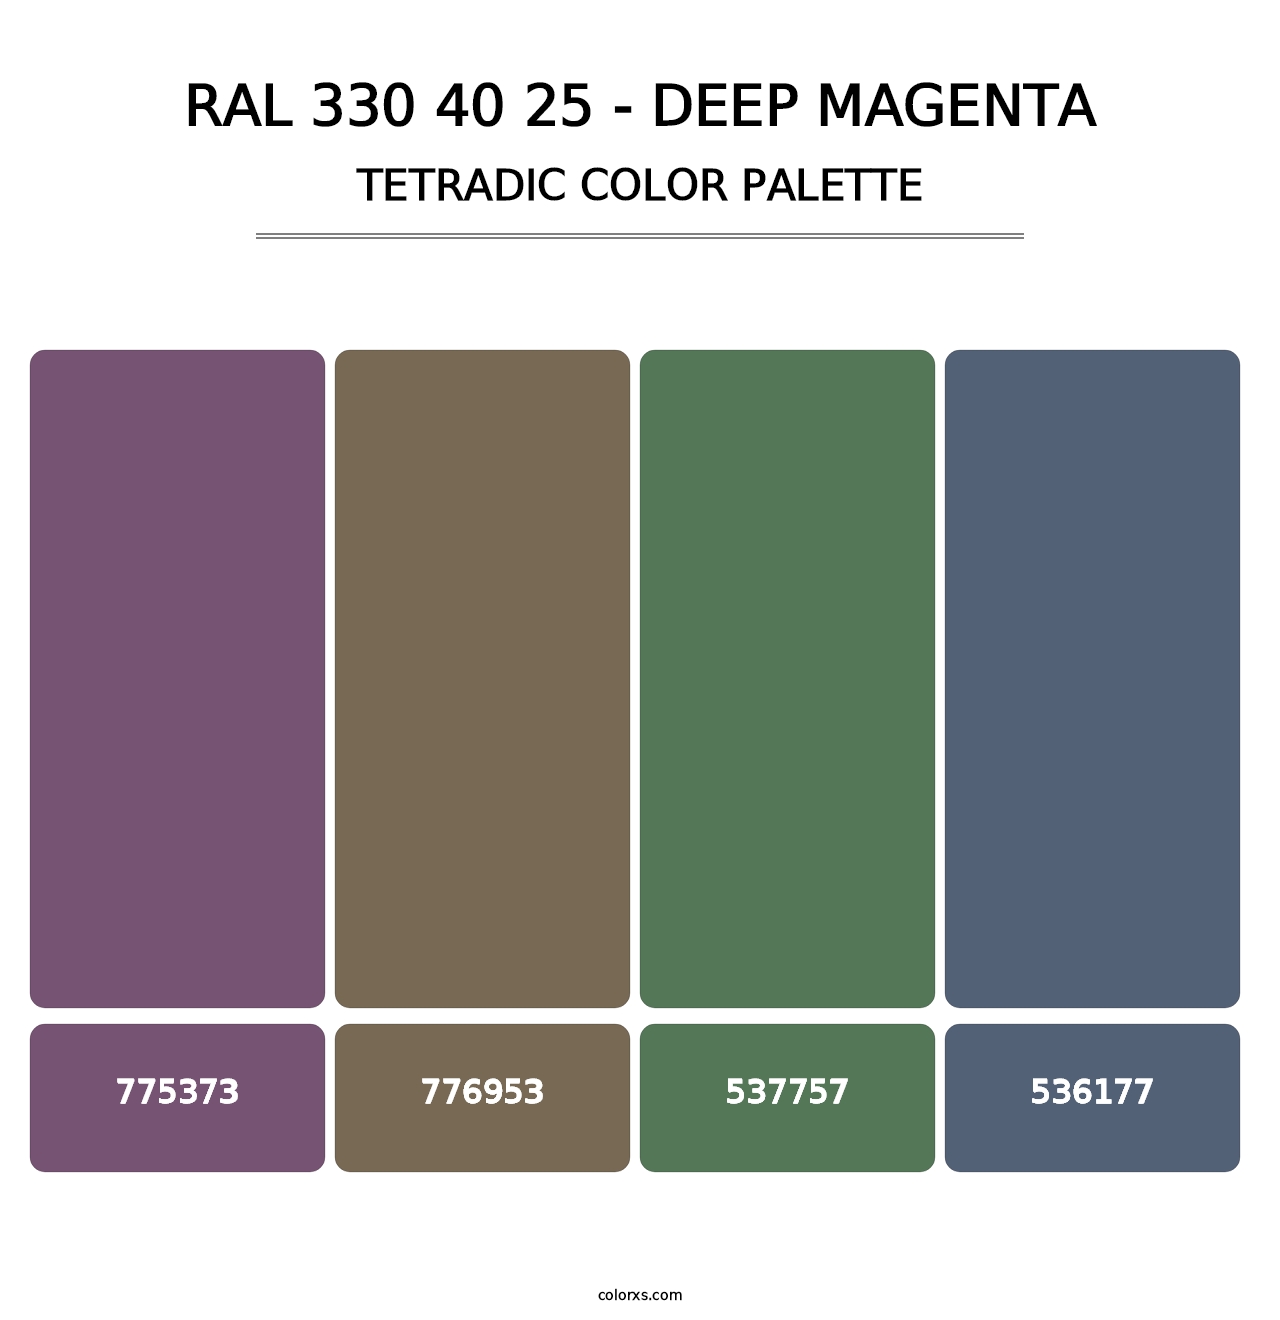 RAL 330 40 25 - Deep Magenta - Tetradic Color Palette